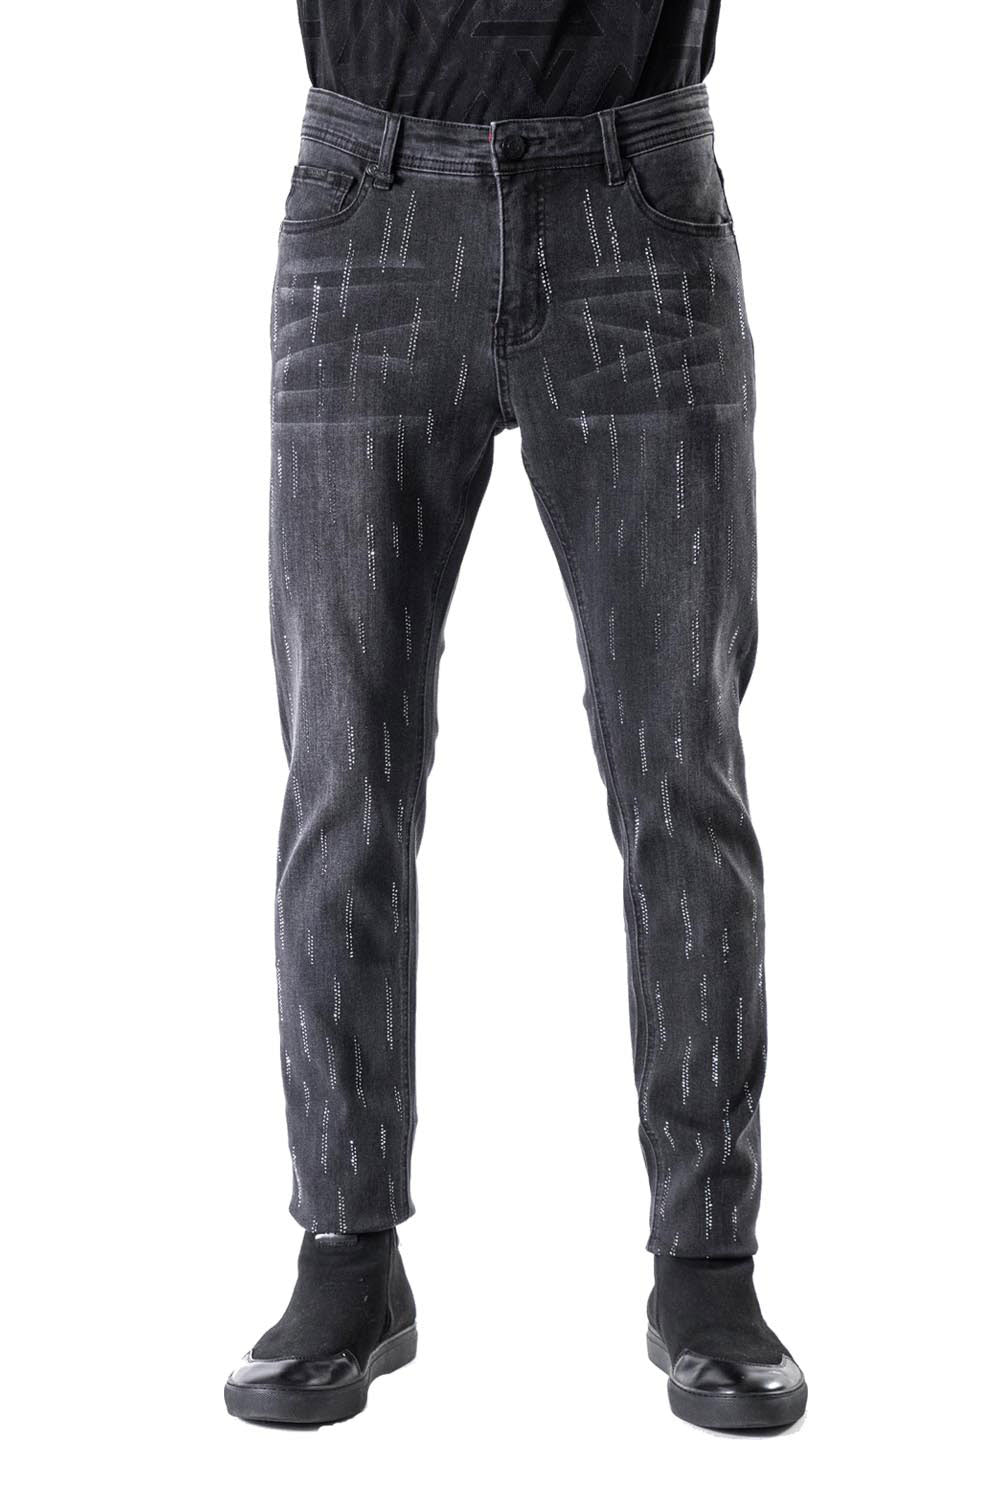 BARABAS Men's Rhinestone Slim Fit Black Denim Jeans SN8886-1